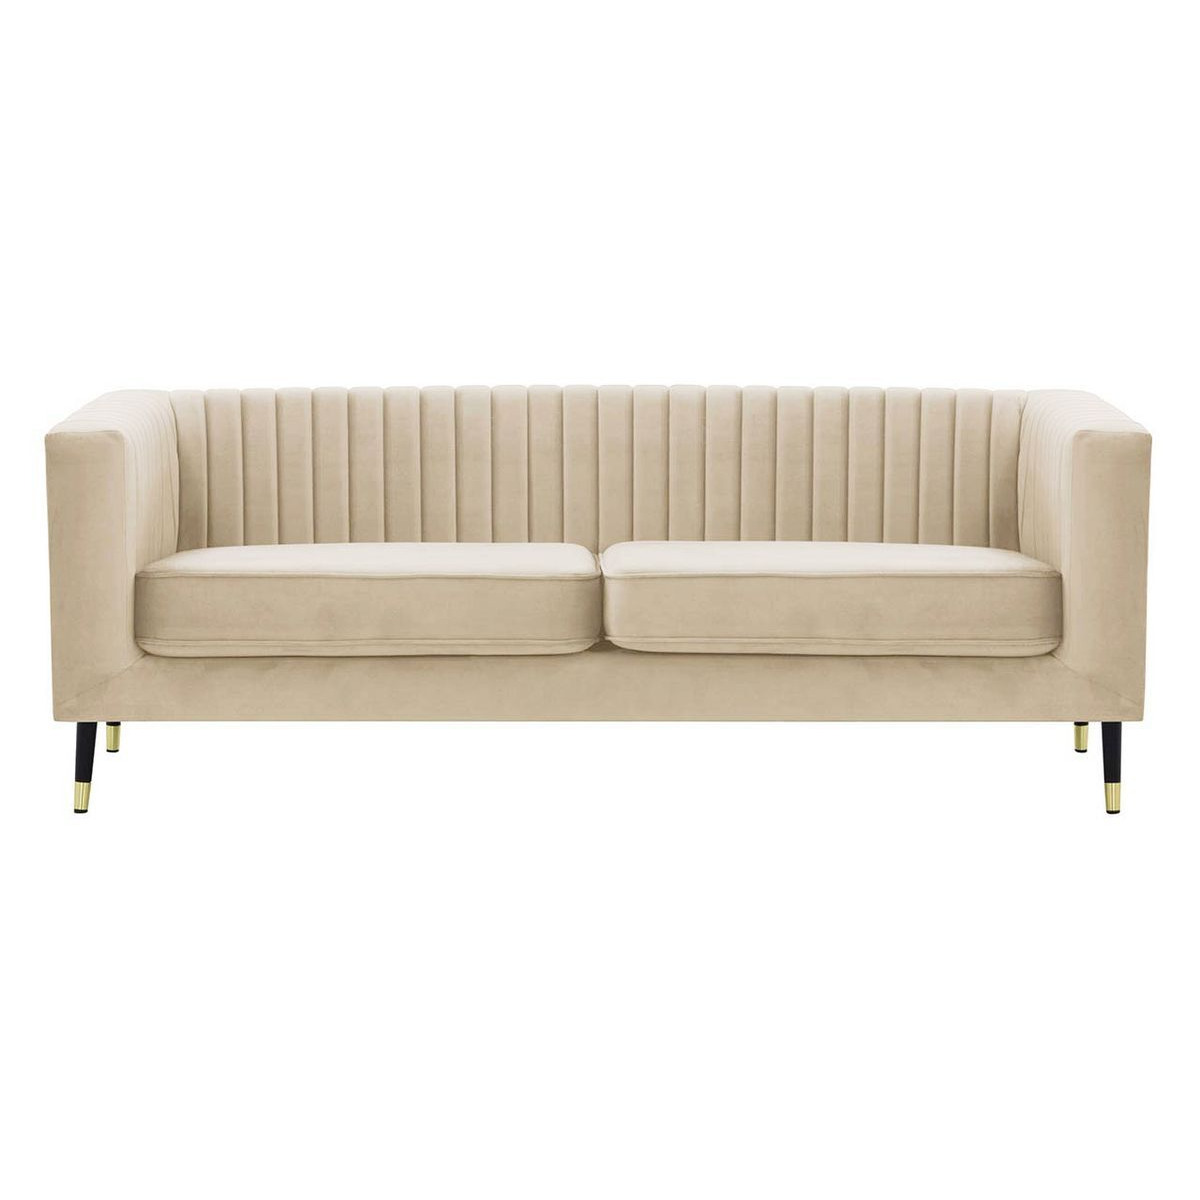 Slender 3 Seater Sofa, light beige - image 1